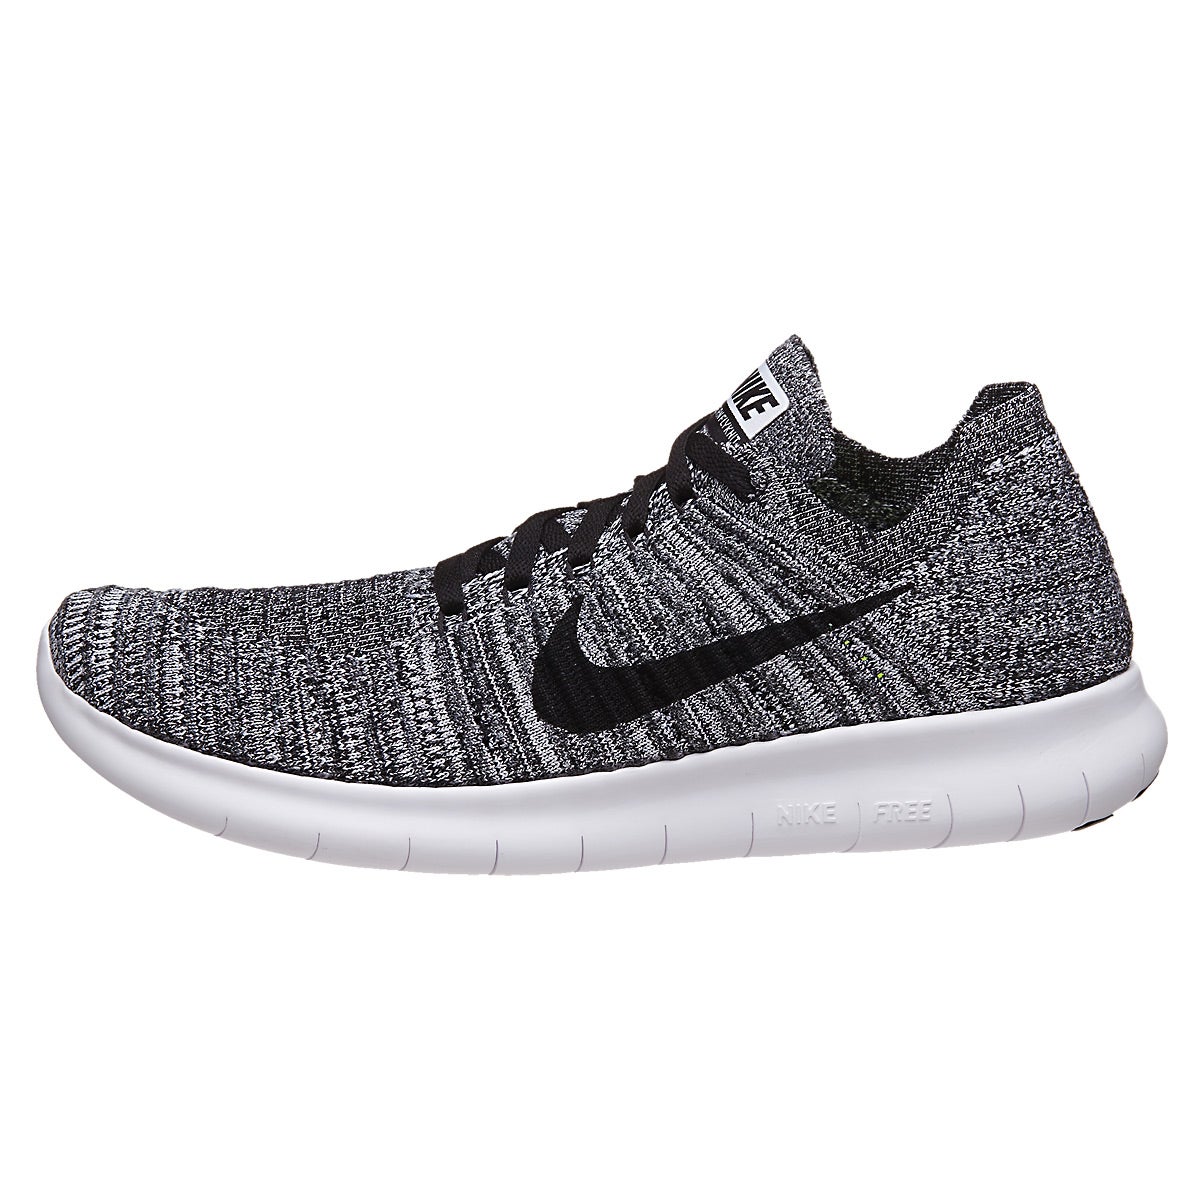 Nike Free RN Flyknit Women's Shoes White/Black 360° View | Running ...